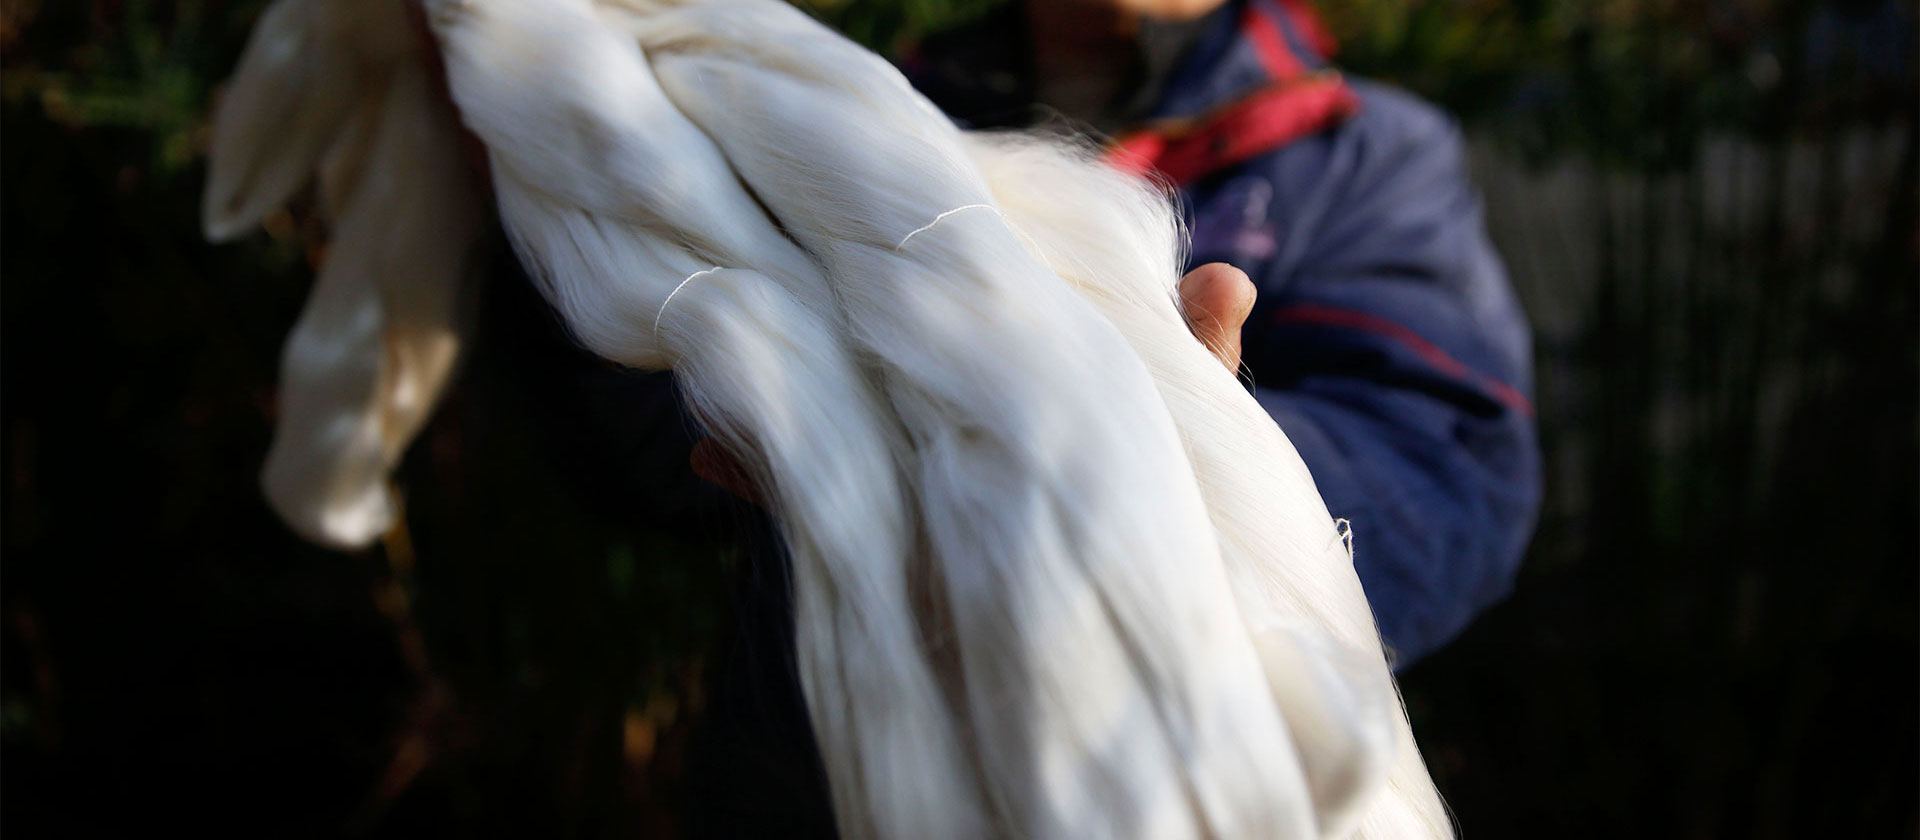 The ingenuity of organic silk